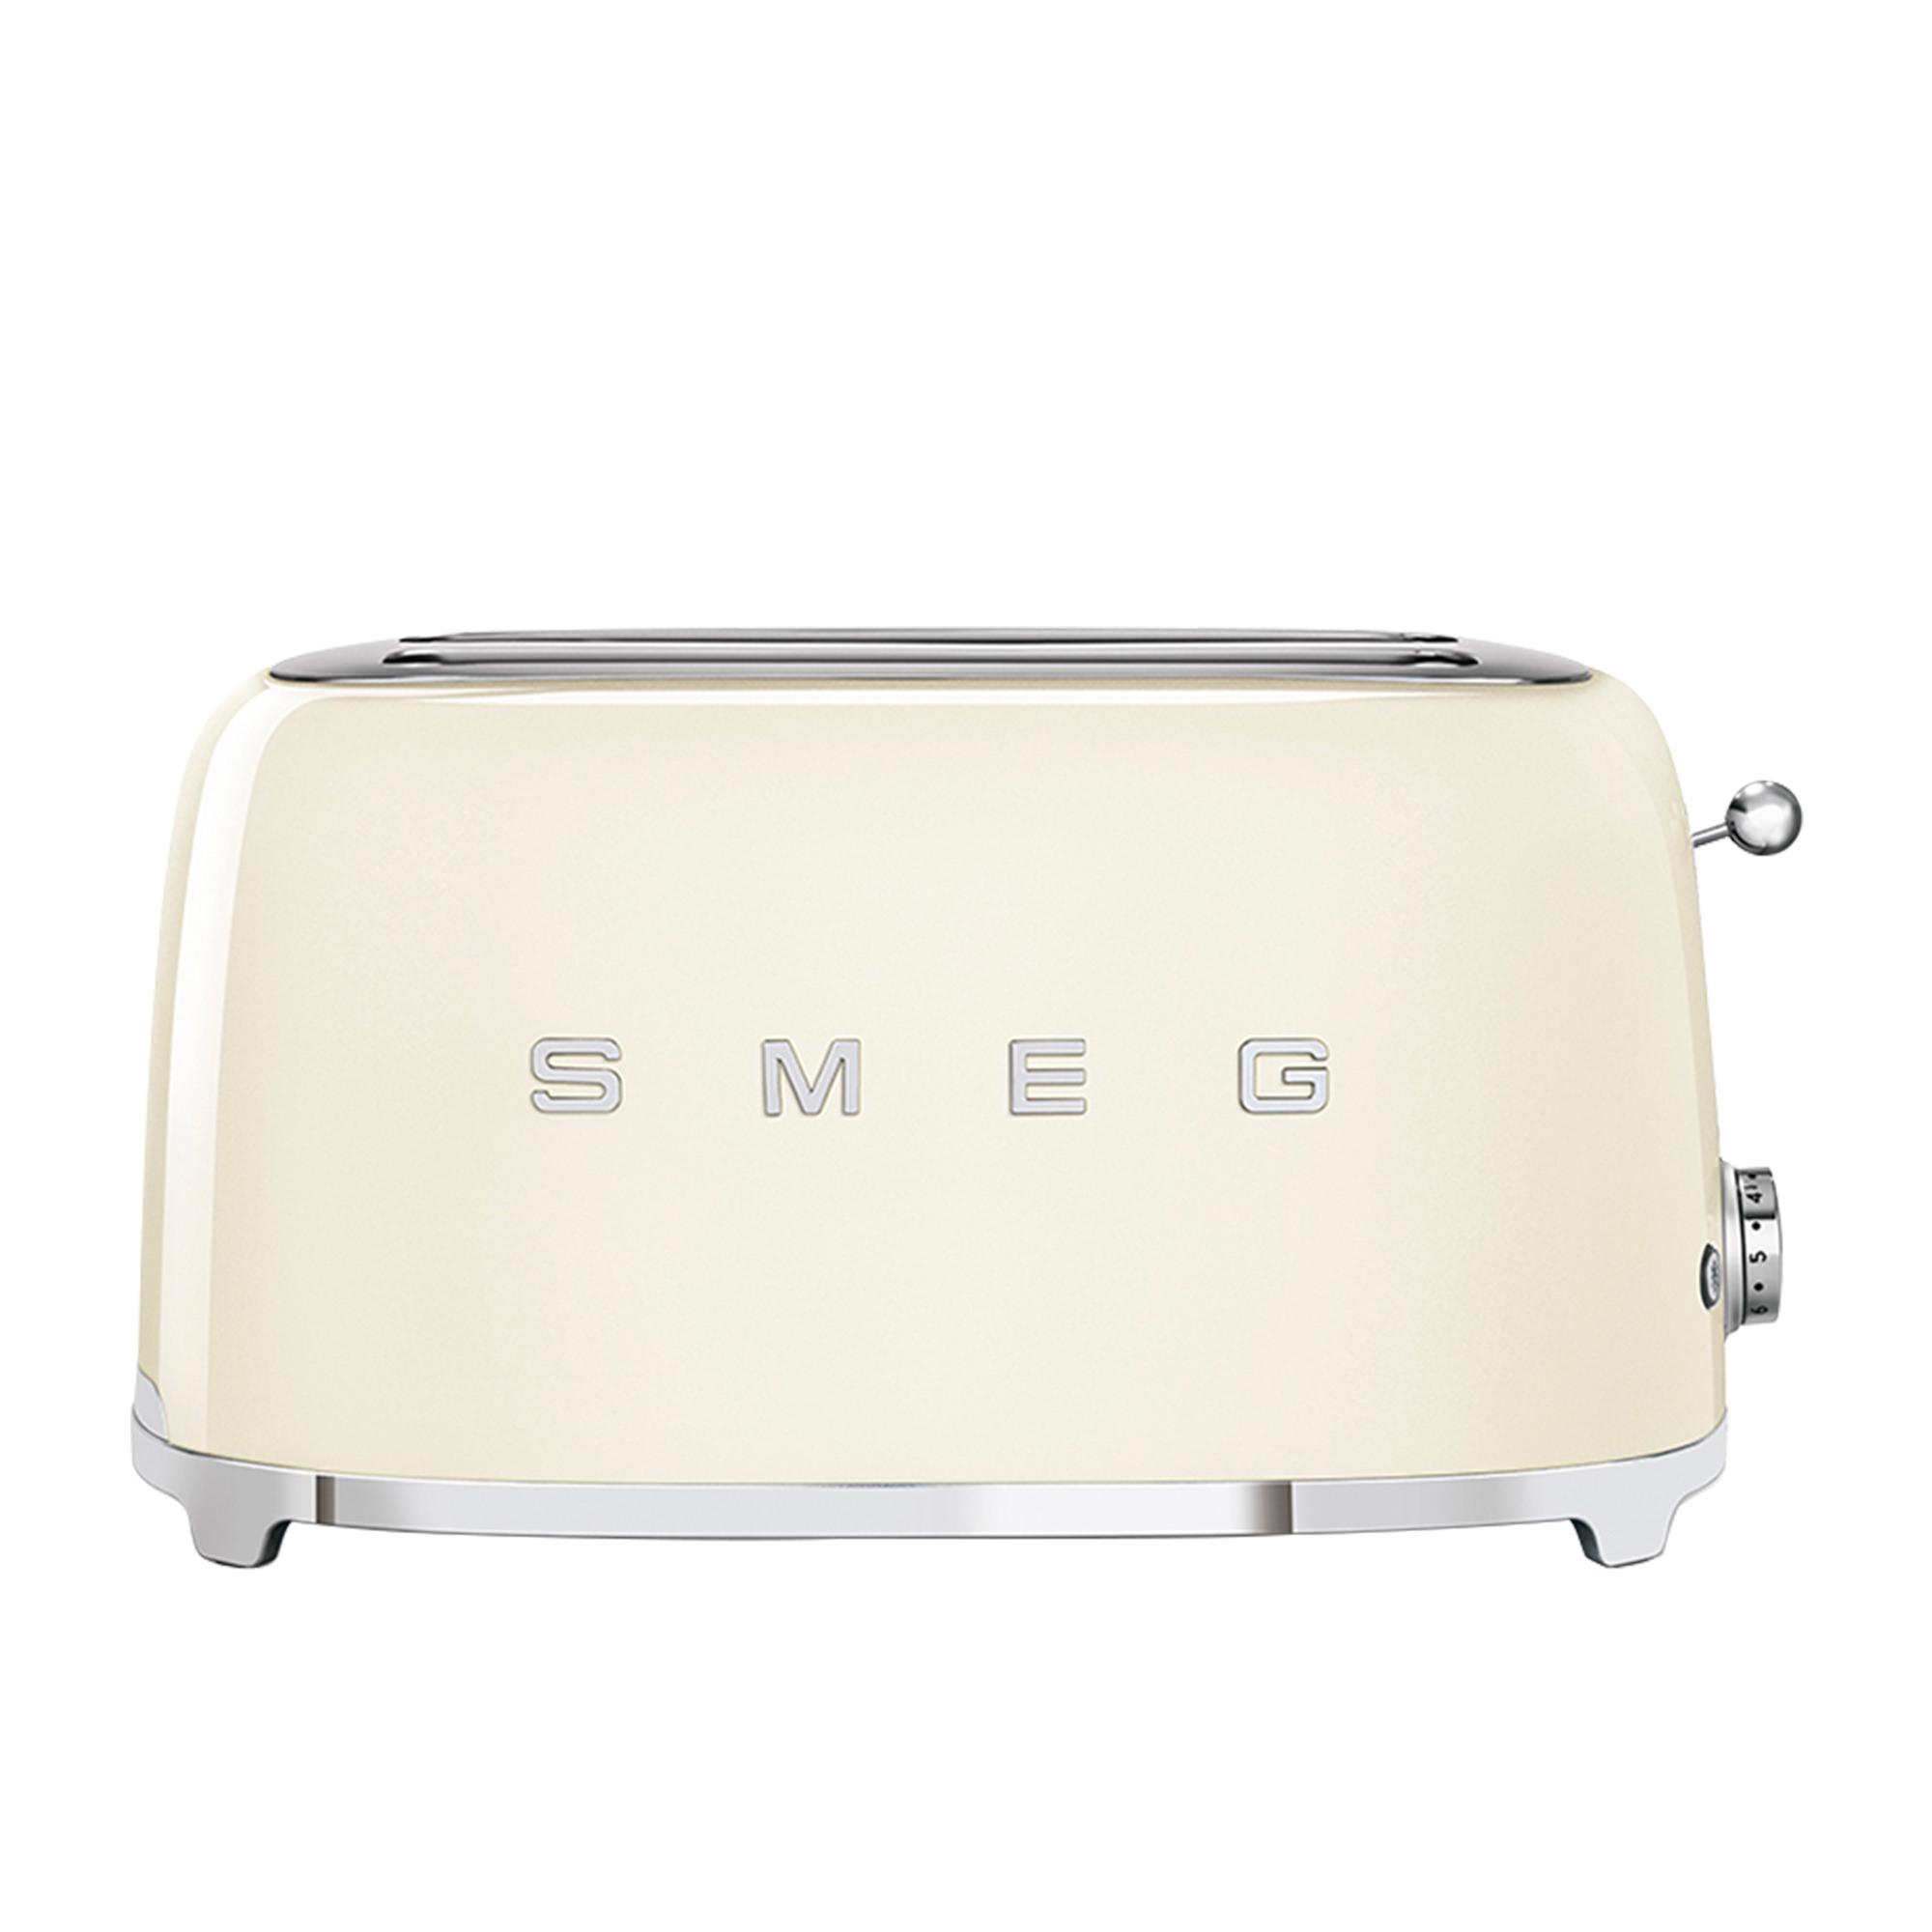 Smeg 50's Retro Style 4 Slice Toaster Cream Image 3